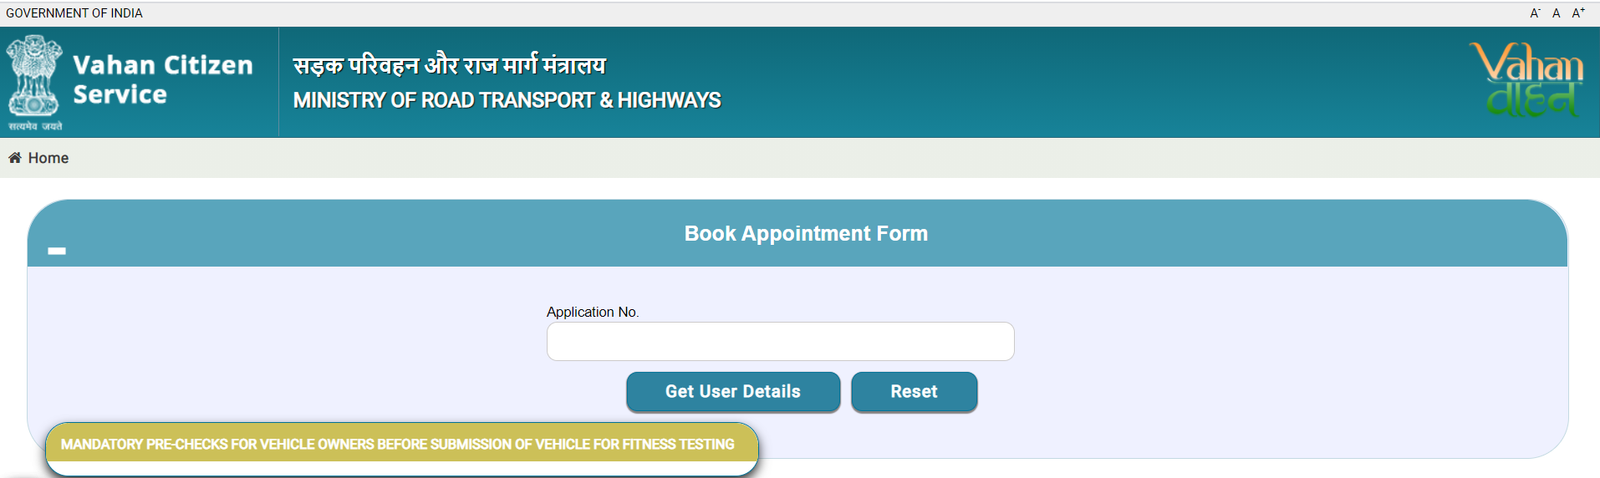 [Check RC status] Vahan Parivahan | Check Vahan 4 Application status